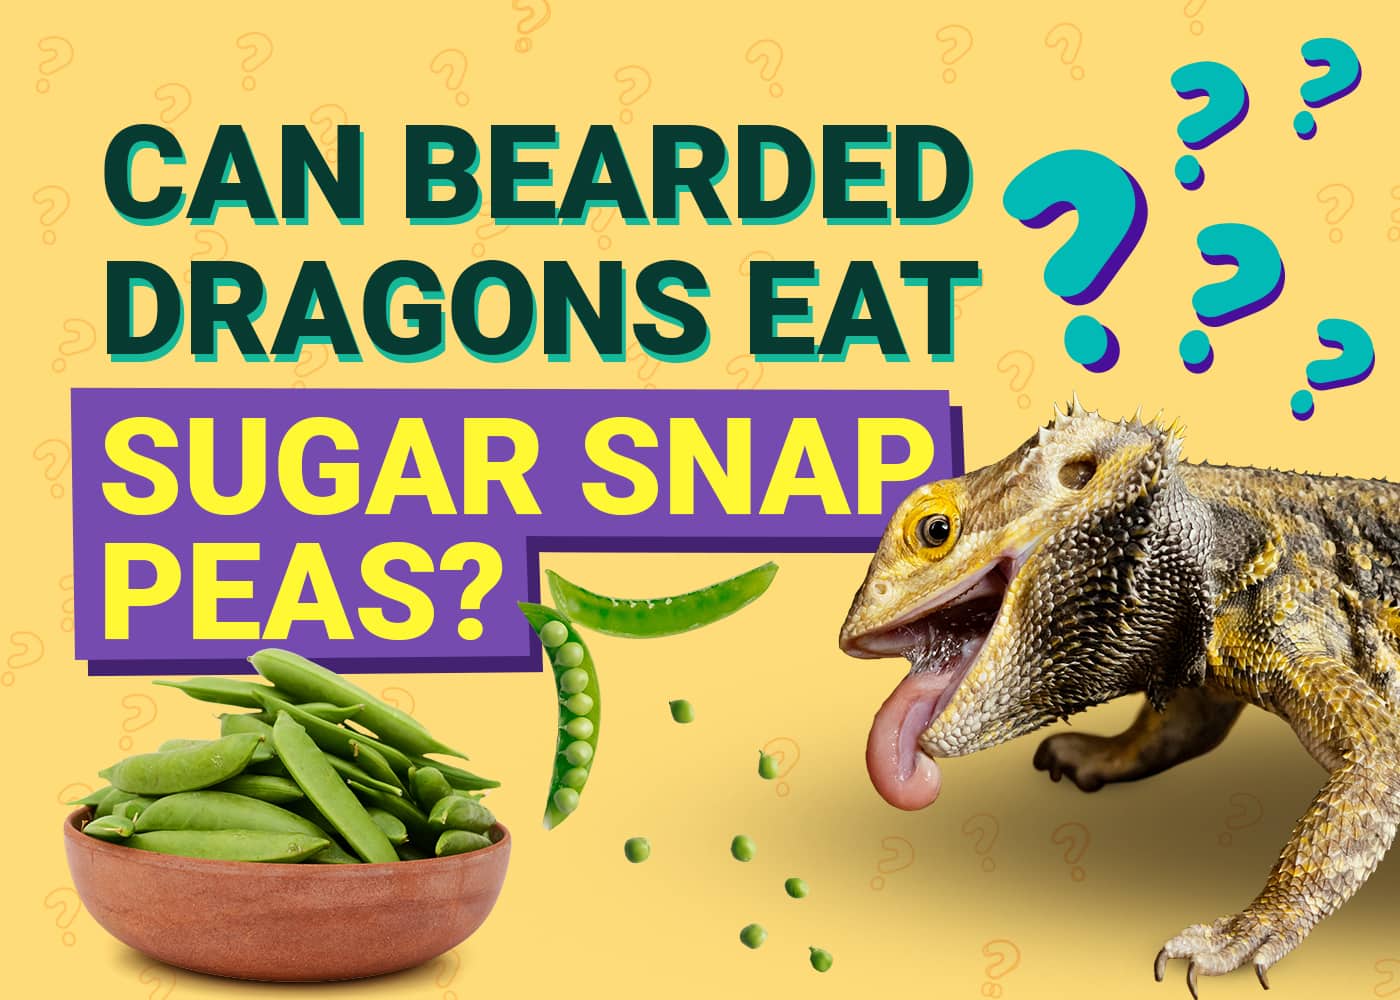 Can Bearded Dragons Eat Sugar Snap Peas?